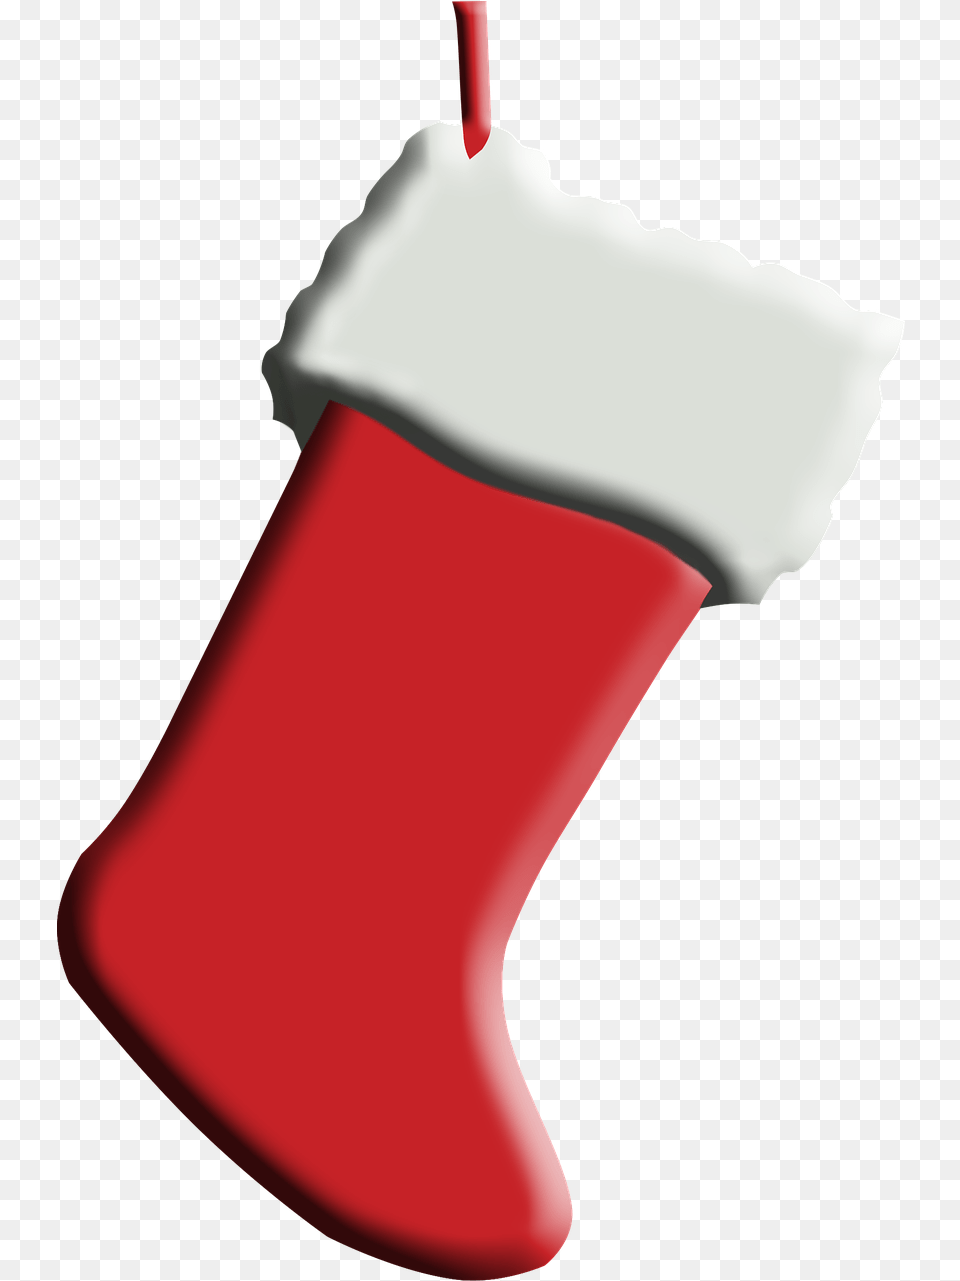 Christmas Stocking On Pixabay Clip Art, Clothing, Hosiery, Christmas Decorations, Christmas Stocking Png Image